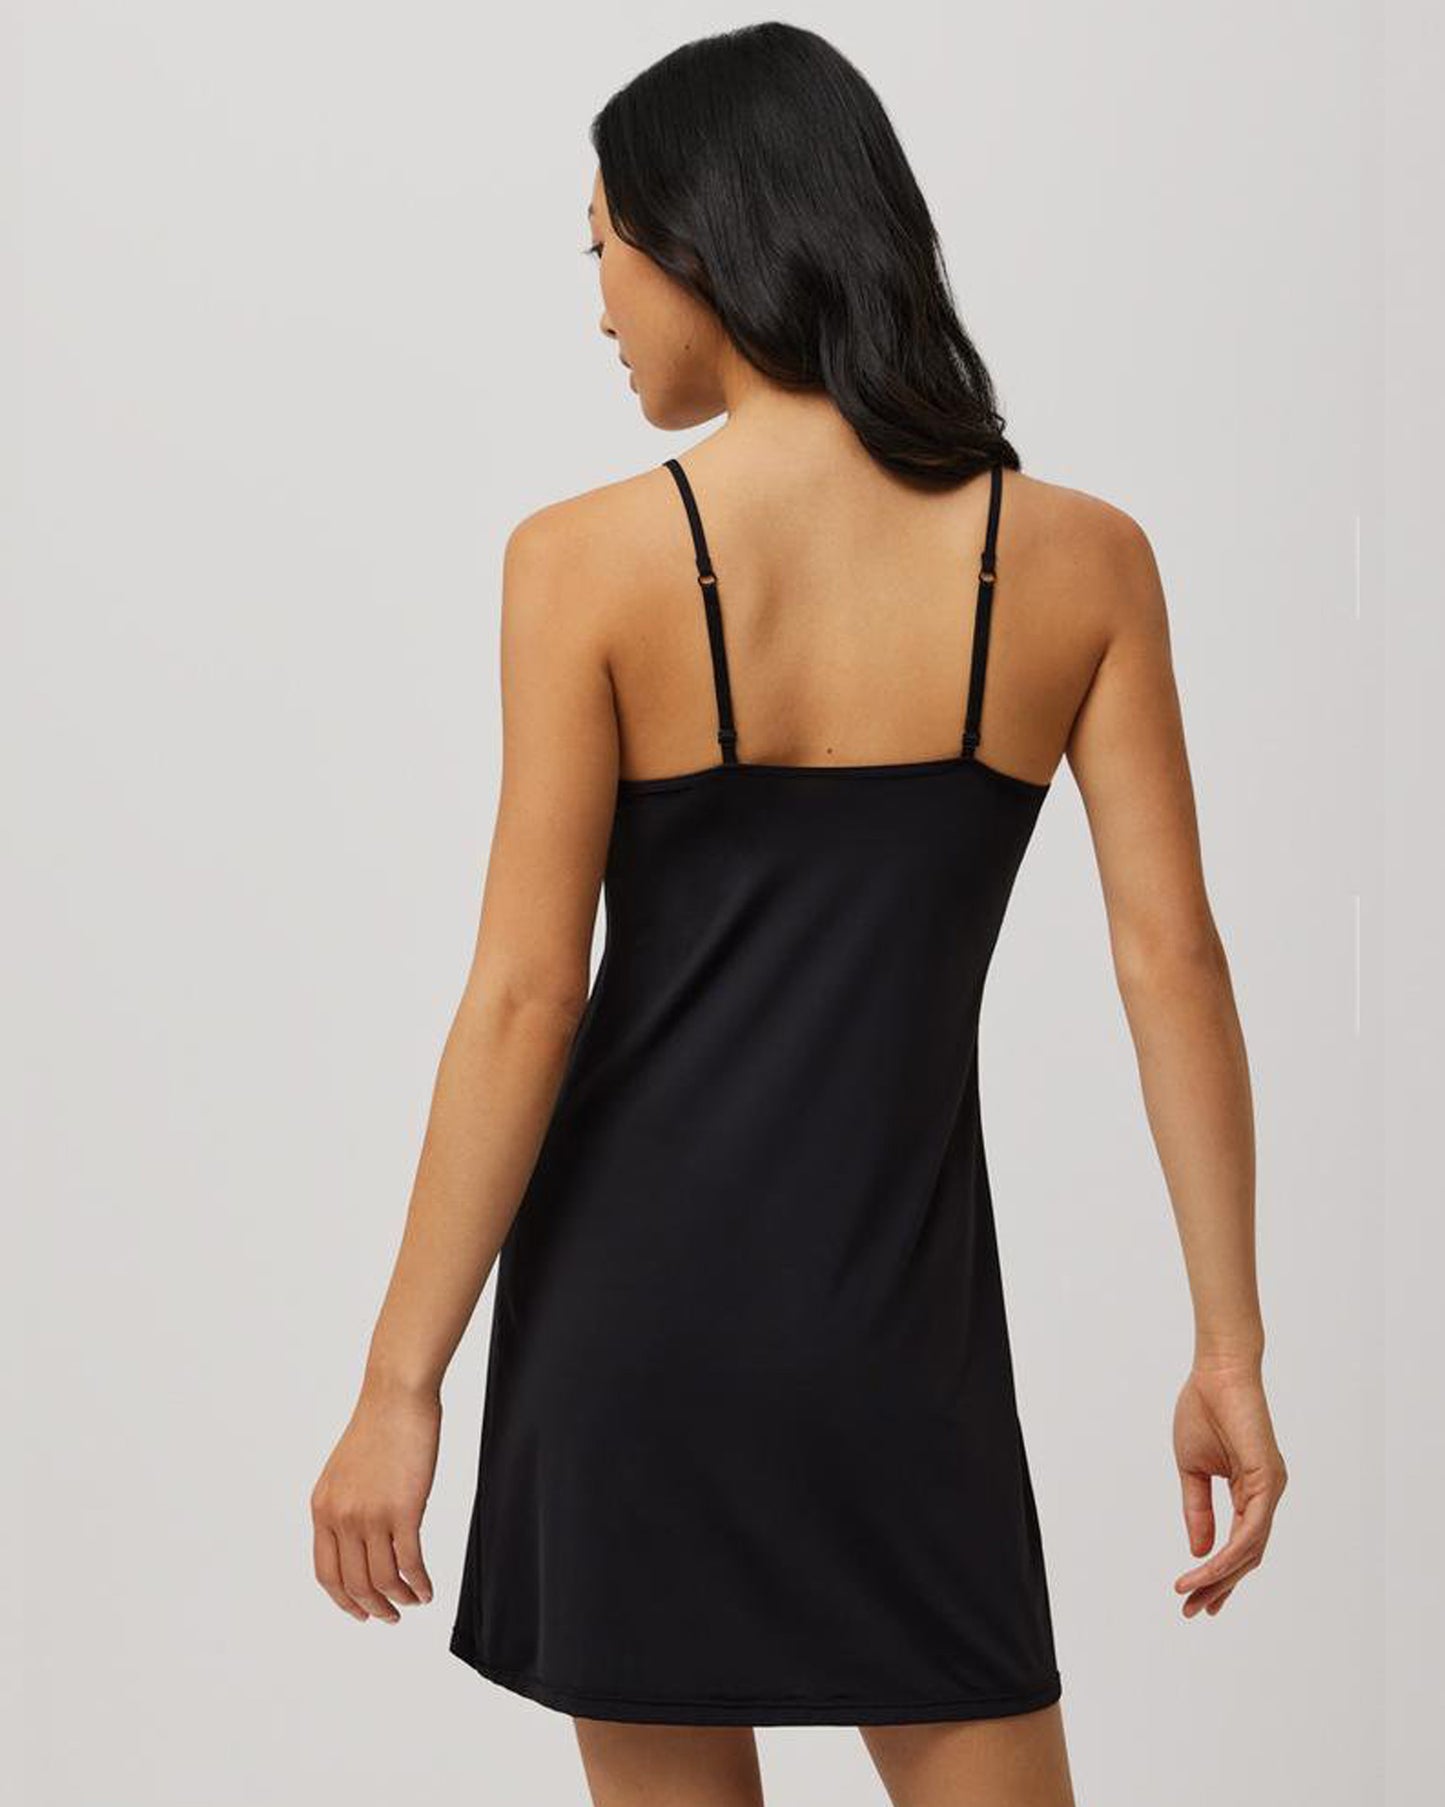 Ysabel Mora 19964 Slip Dress - Basic black v-neck slip dress made of light microfibre fabric with adjustable straps for better fit, comfort and support. A great base layer to wear under dresses.